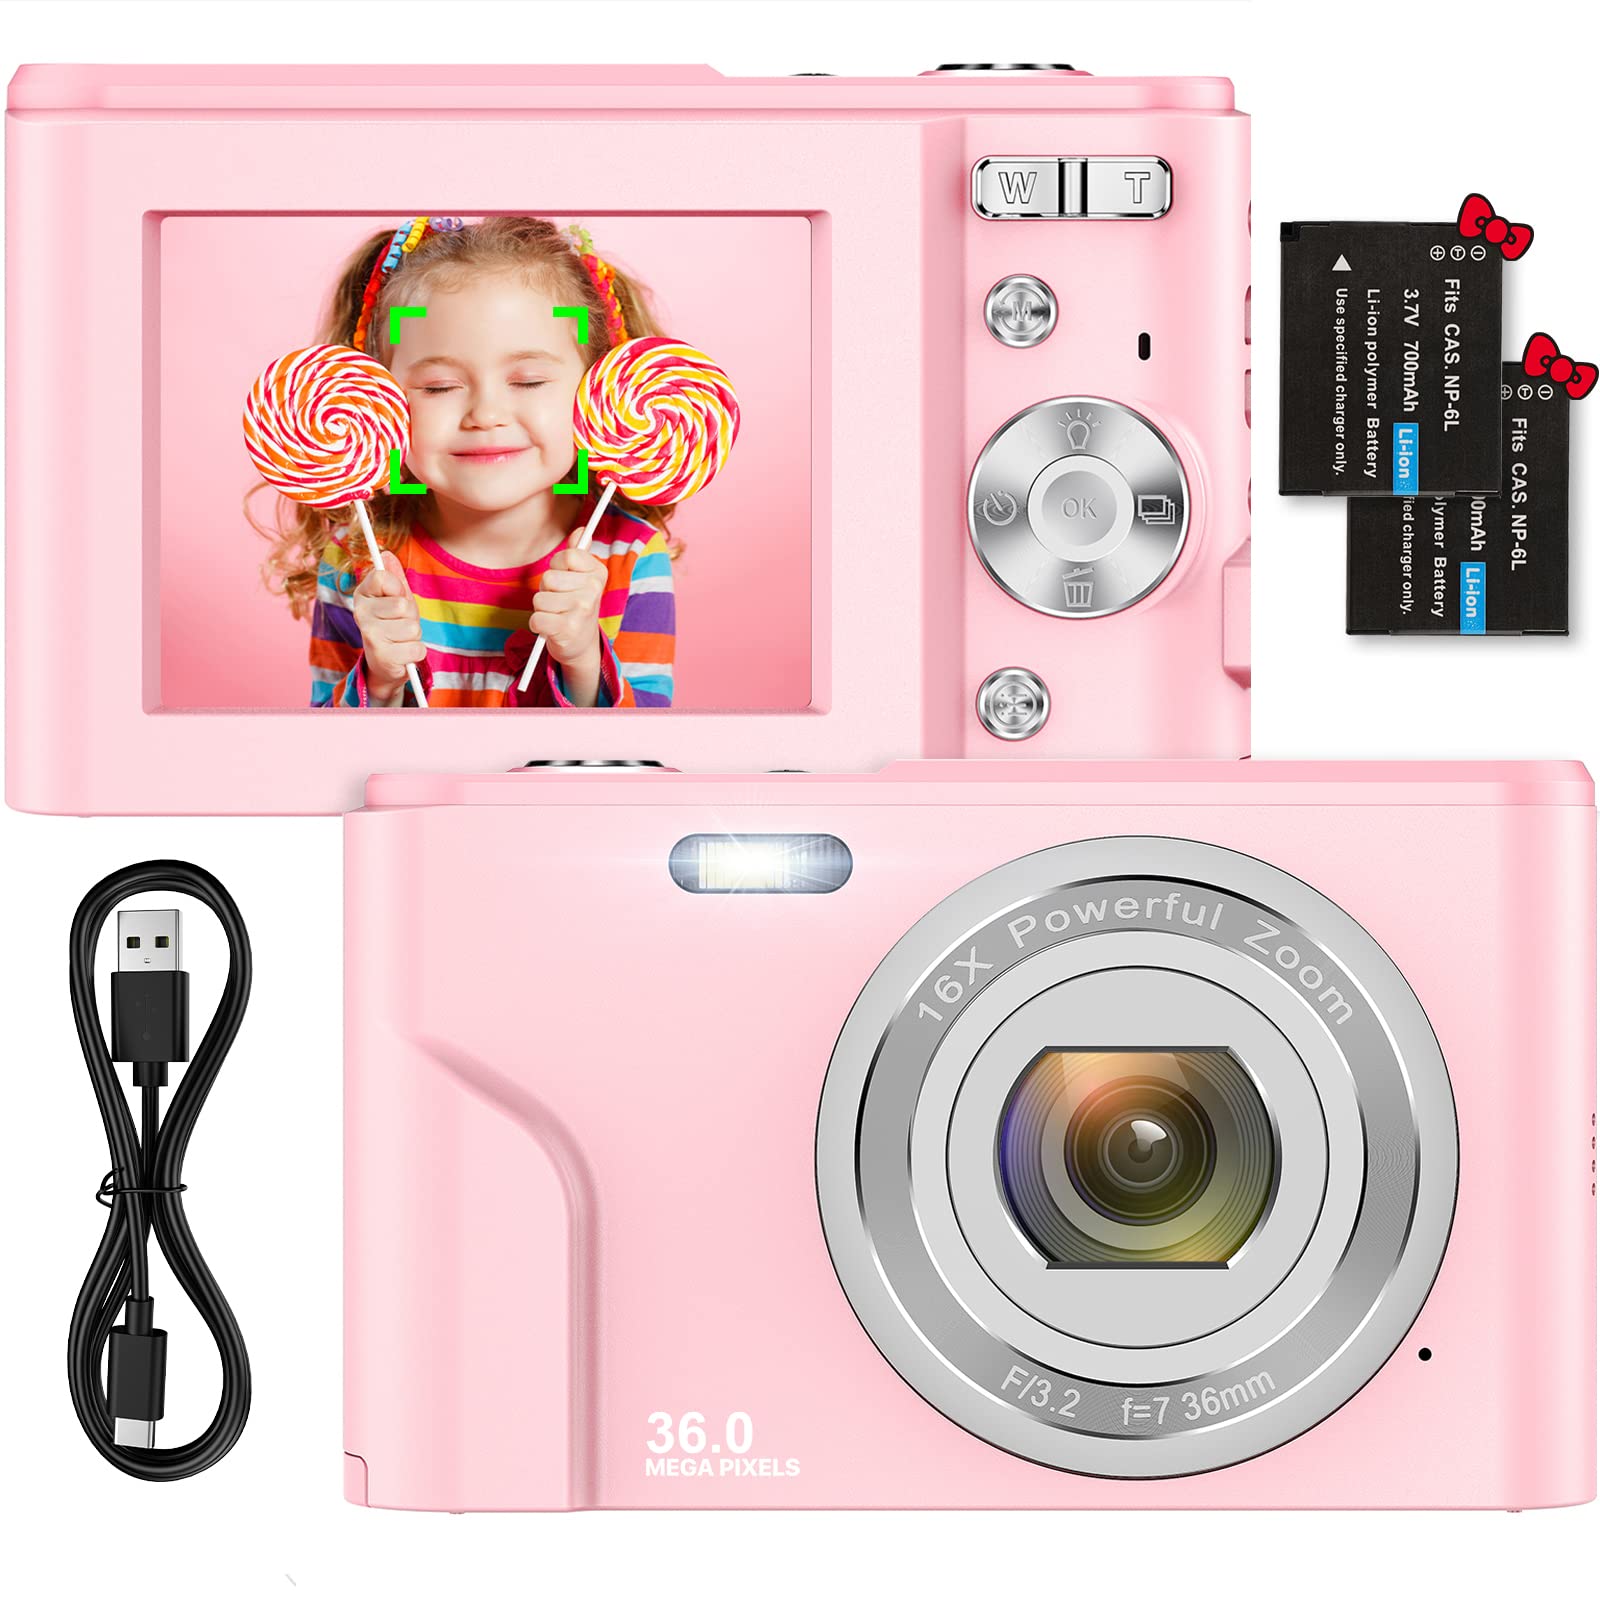 Digitalkamera 1080P HD Kompaktkamera 36 Megapixel Mini-Videokamera 2,4" LCD Digitalkamera wiederaufladbare Fotokamera mit 16X Digitalzoom für Studenten/Erwachsene/Kinder/Anfänger (Rosa)